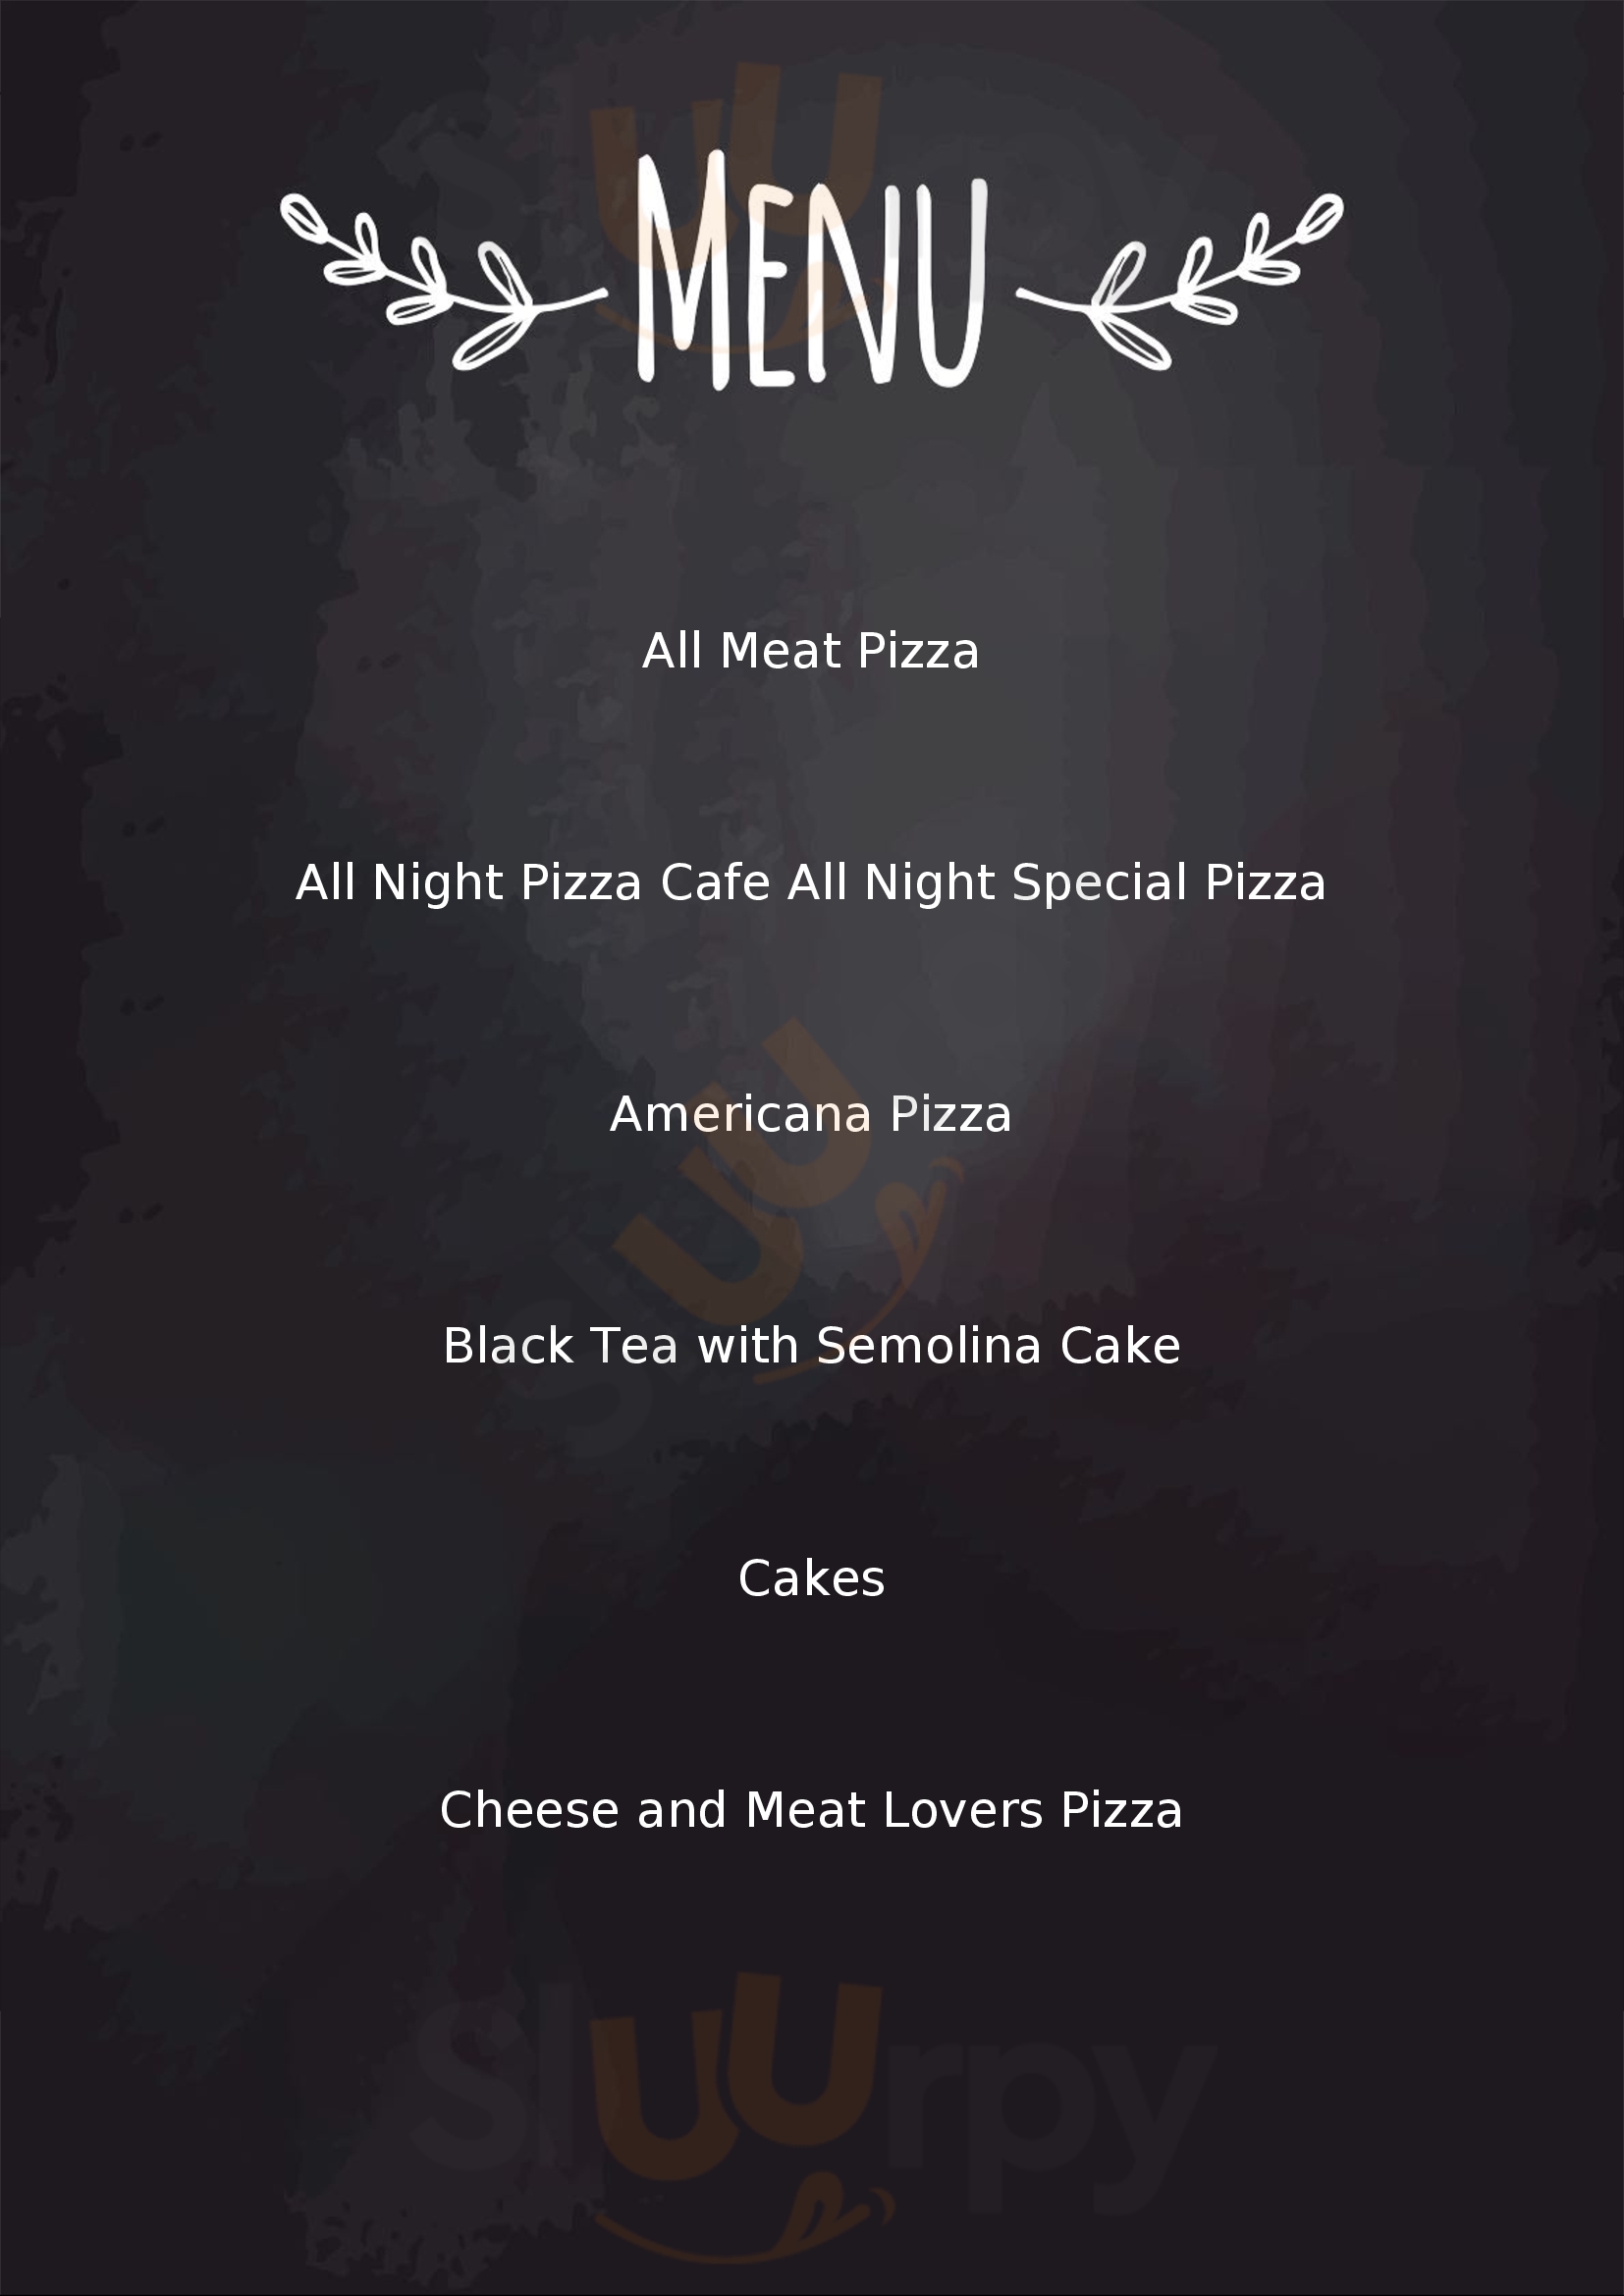 All Night Pizza Cafe Victoria Park Menu - 1